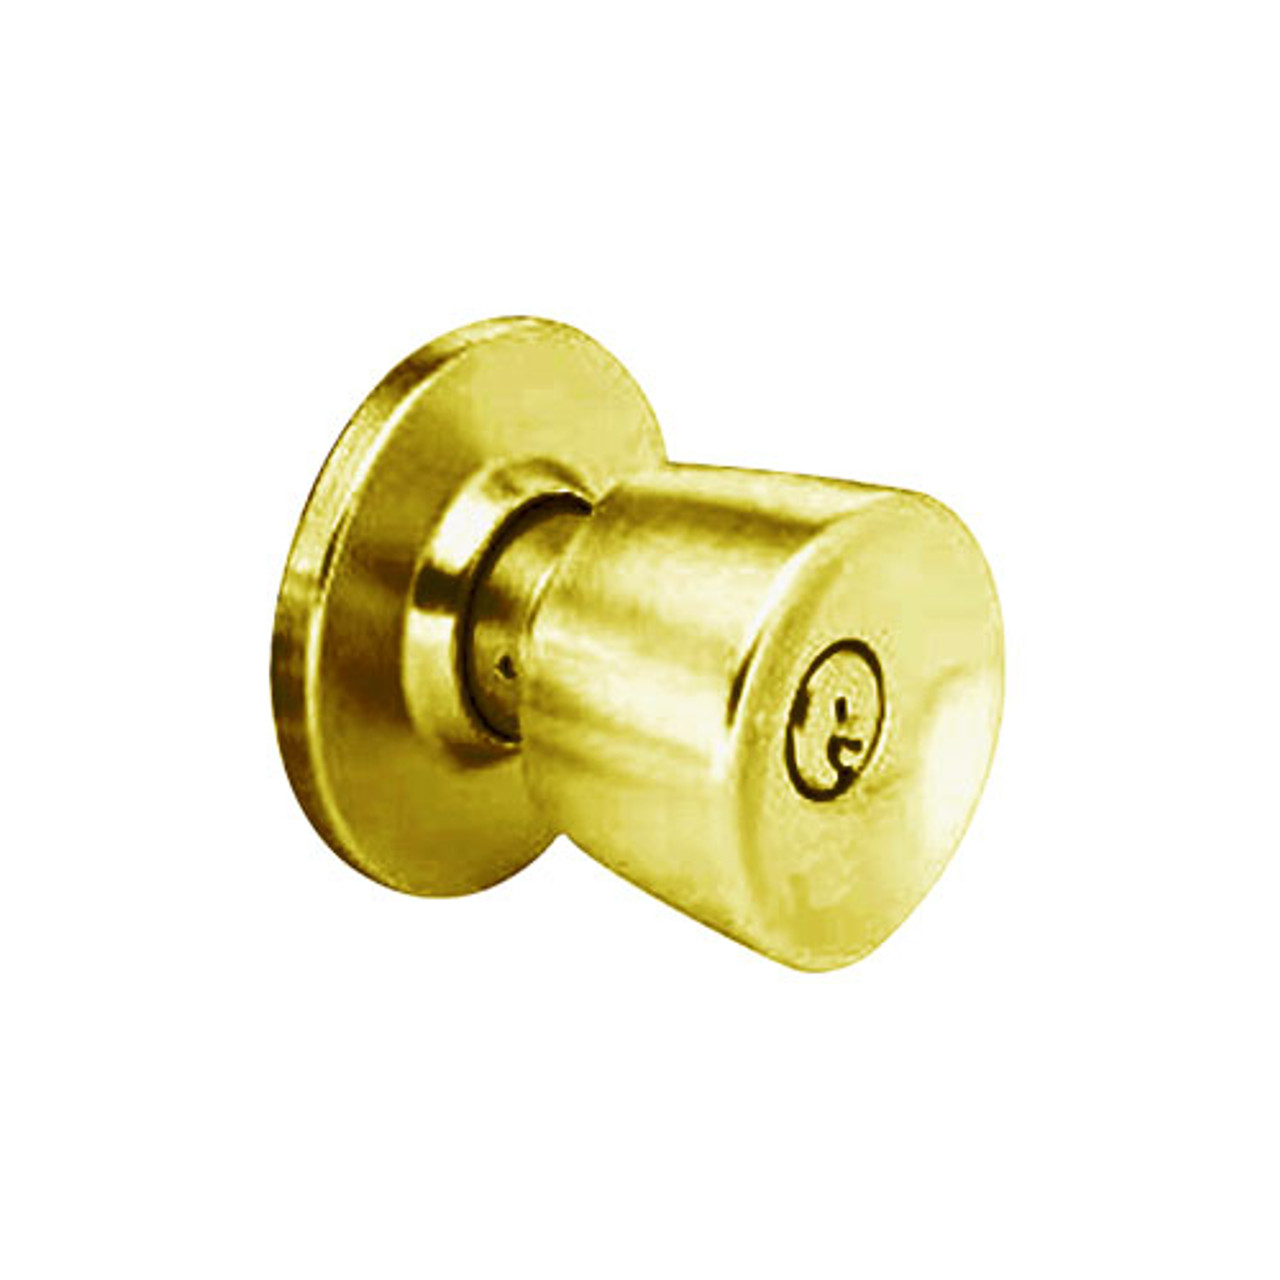 MK11-DD-05A Arrow Lock MK Series Entrance/Office Knob with DD Design in Antique Brass Finish